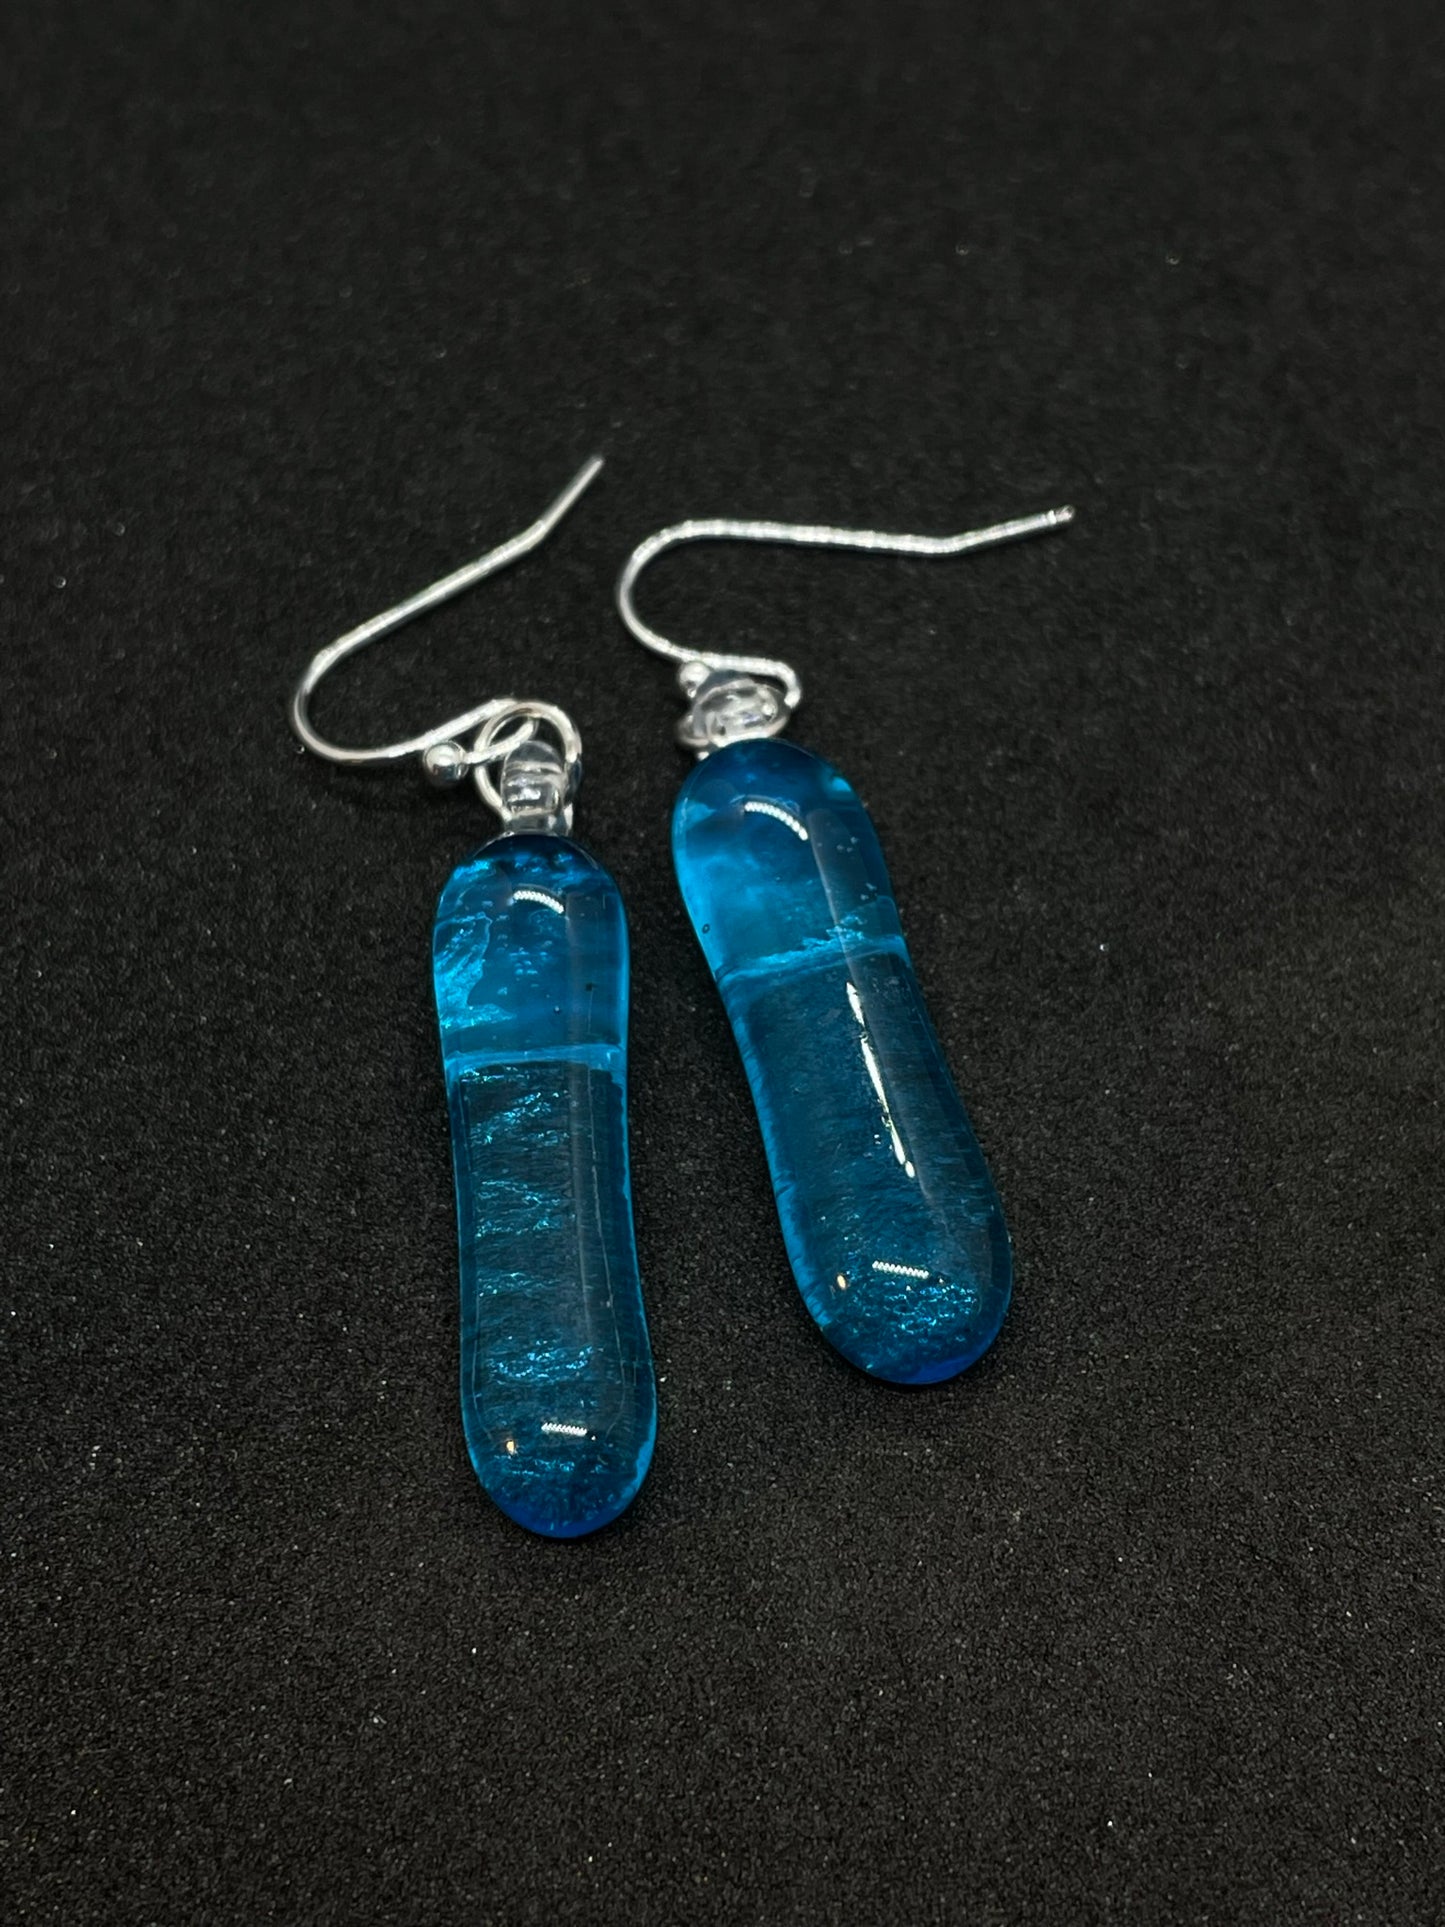 Fused bright blue glass oblong earrings